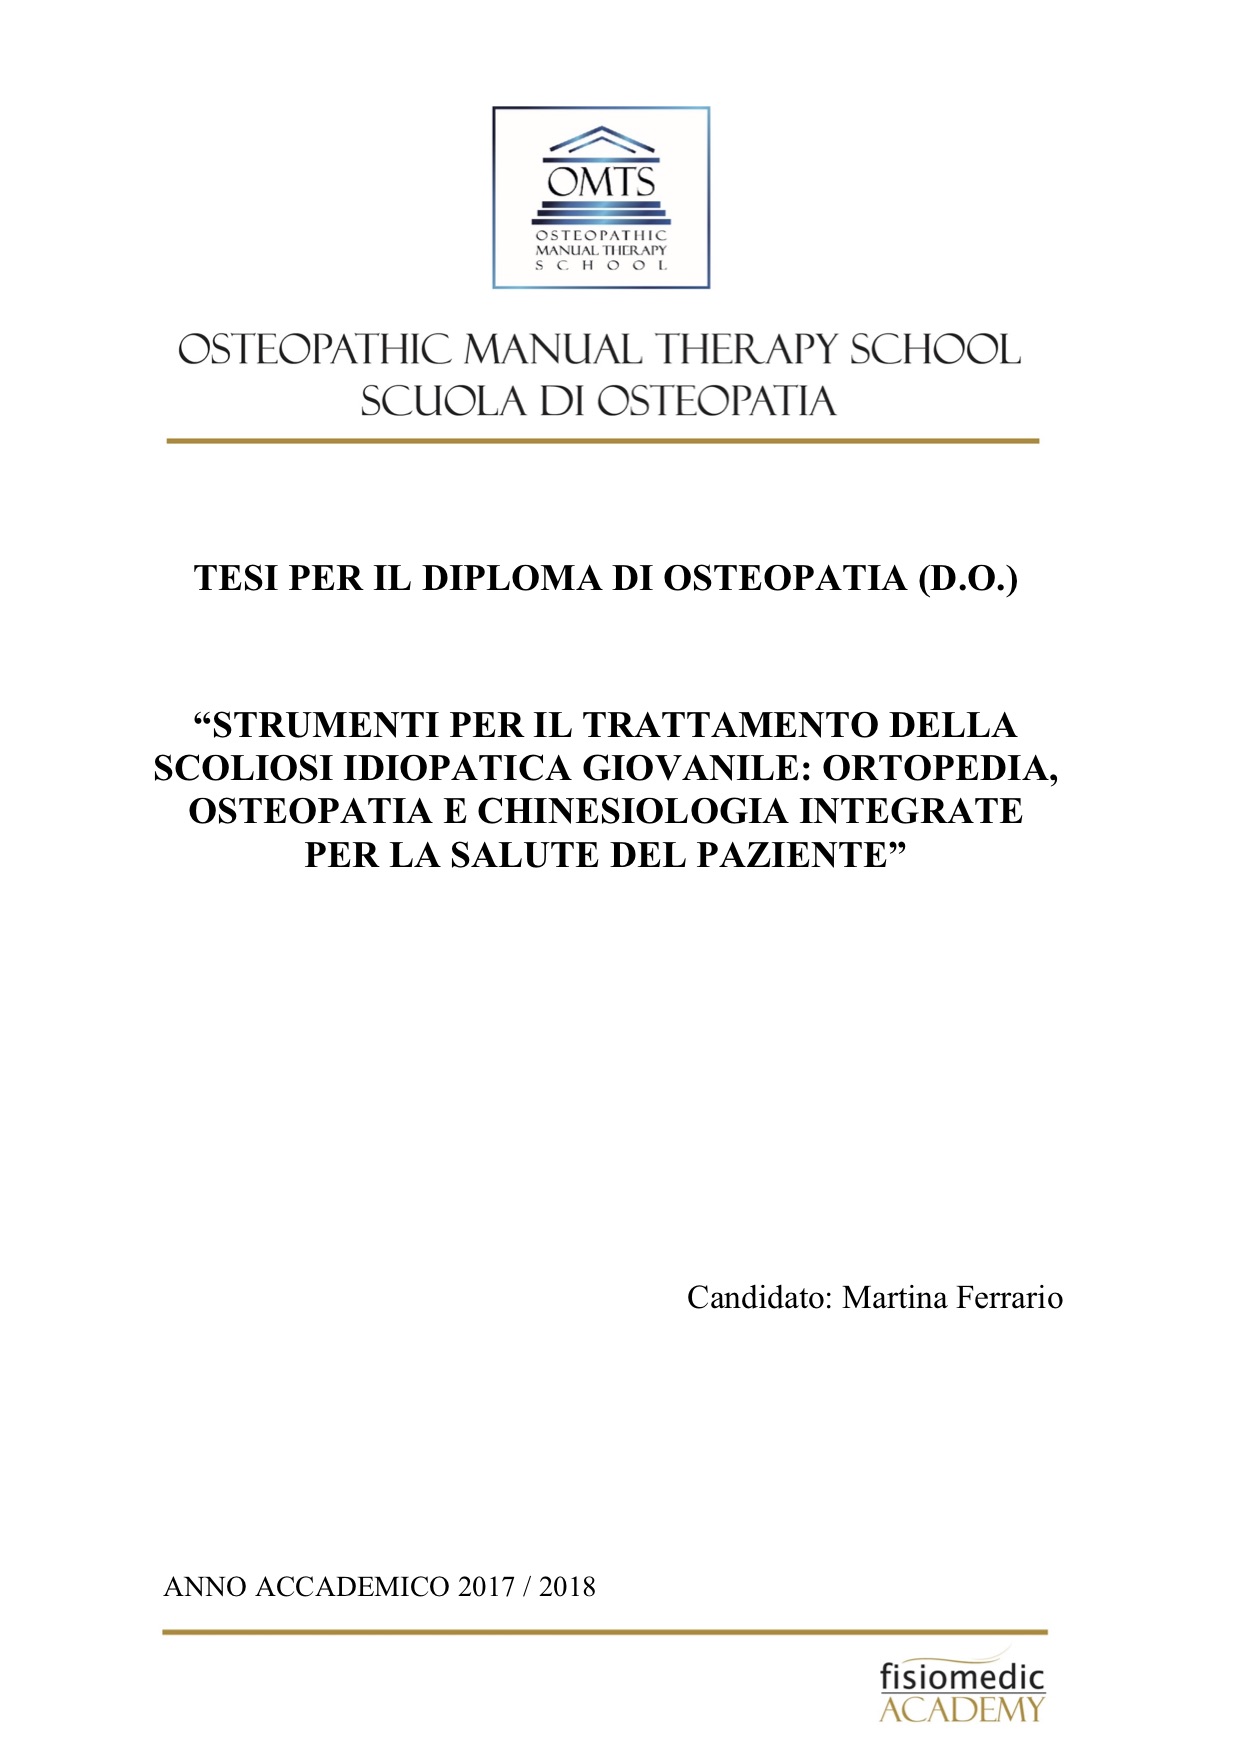 Martina Ferrario Tesi Diploma Osteopatia 2018